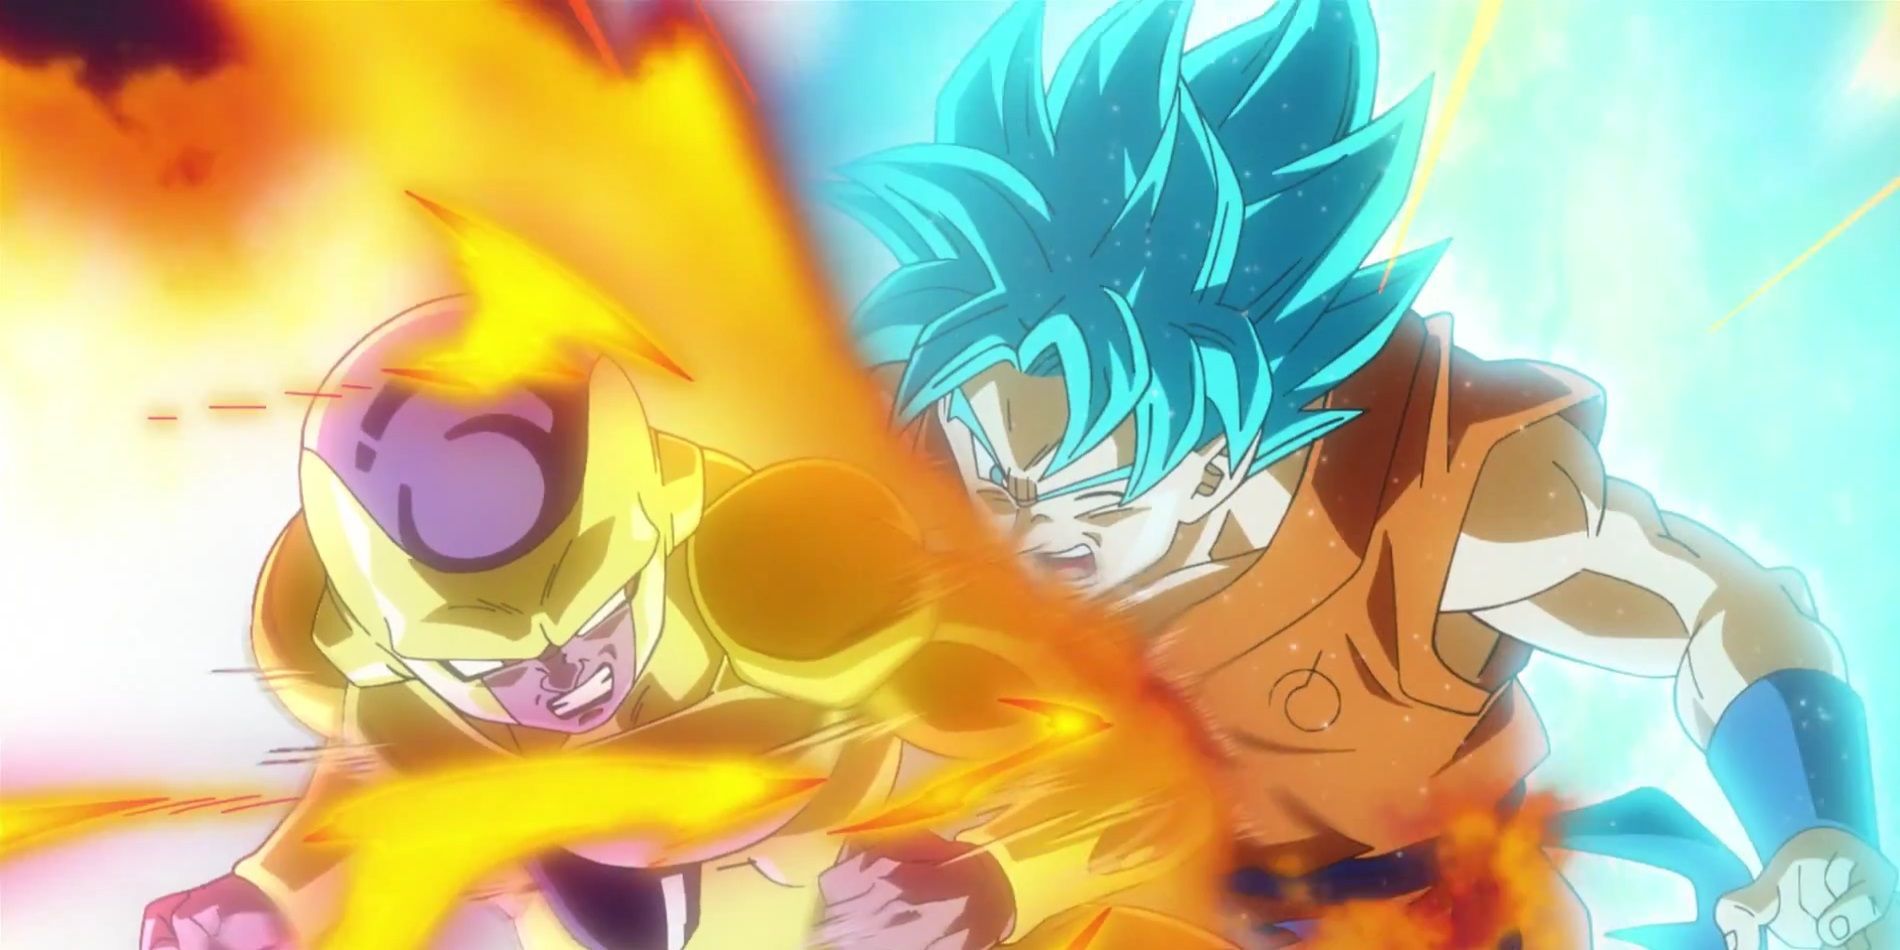 Golden Frieza vs Super Saiyan God Goku Dragon Ball Z Resurrection F